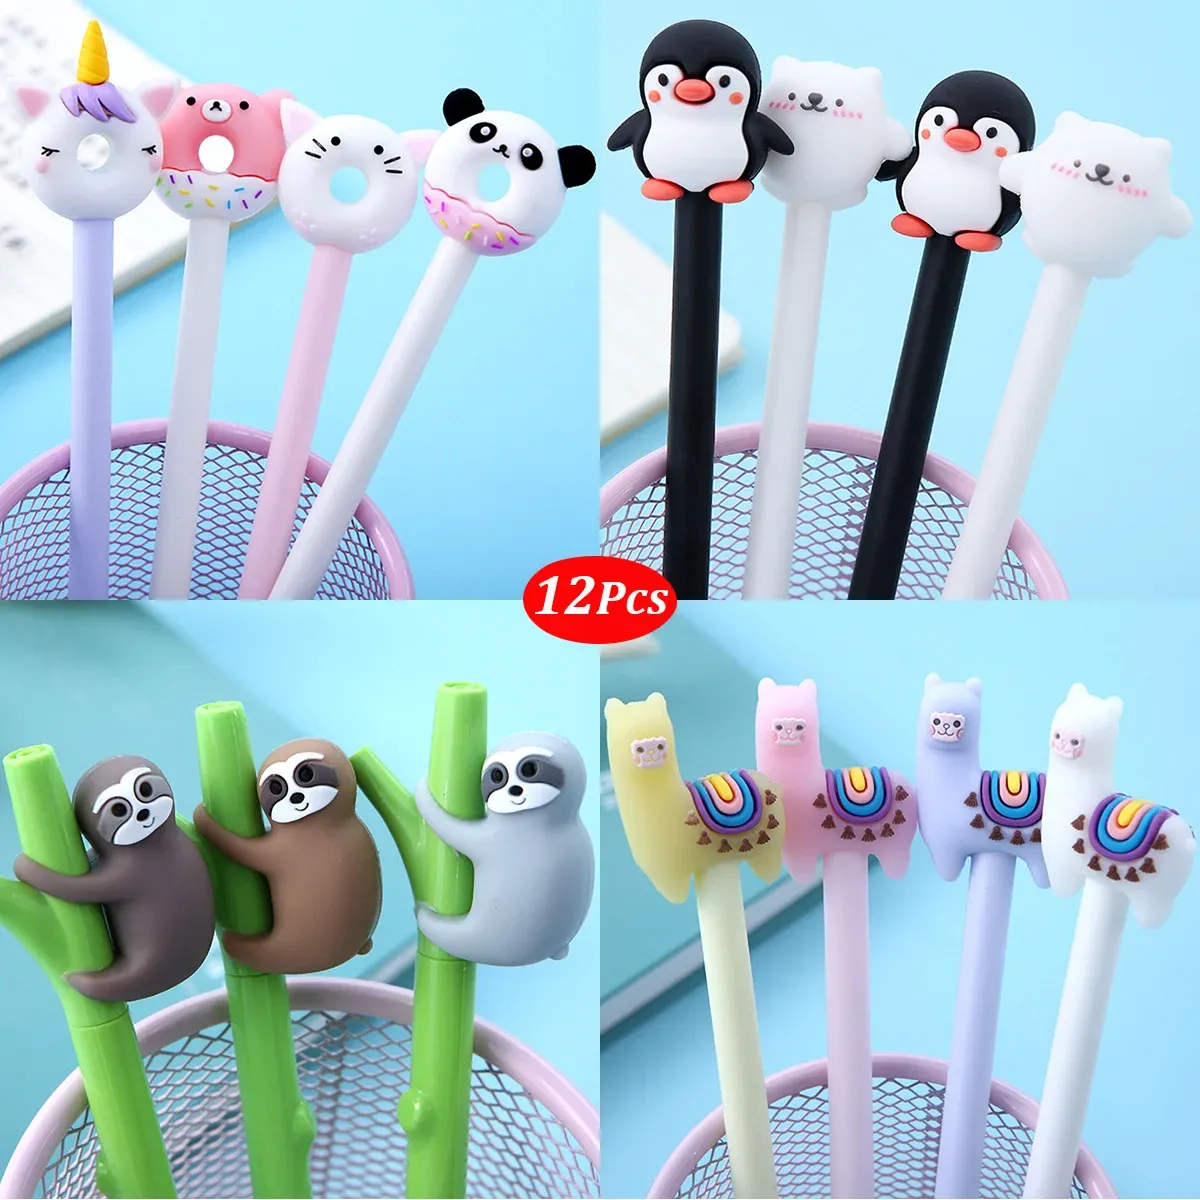 Pens 12Pcs Japanese Cute Pens Sloth Animal Elegant Fancy Kawaii Gel Ink Pen Adults Stationery Funny School Office Ballpoint Wholesale